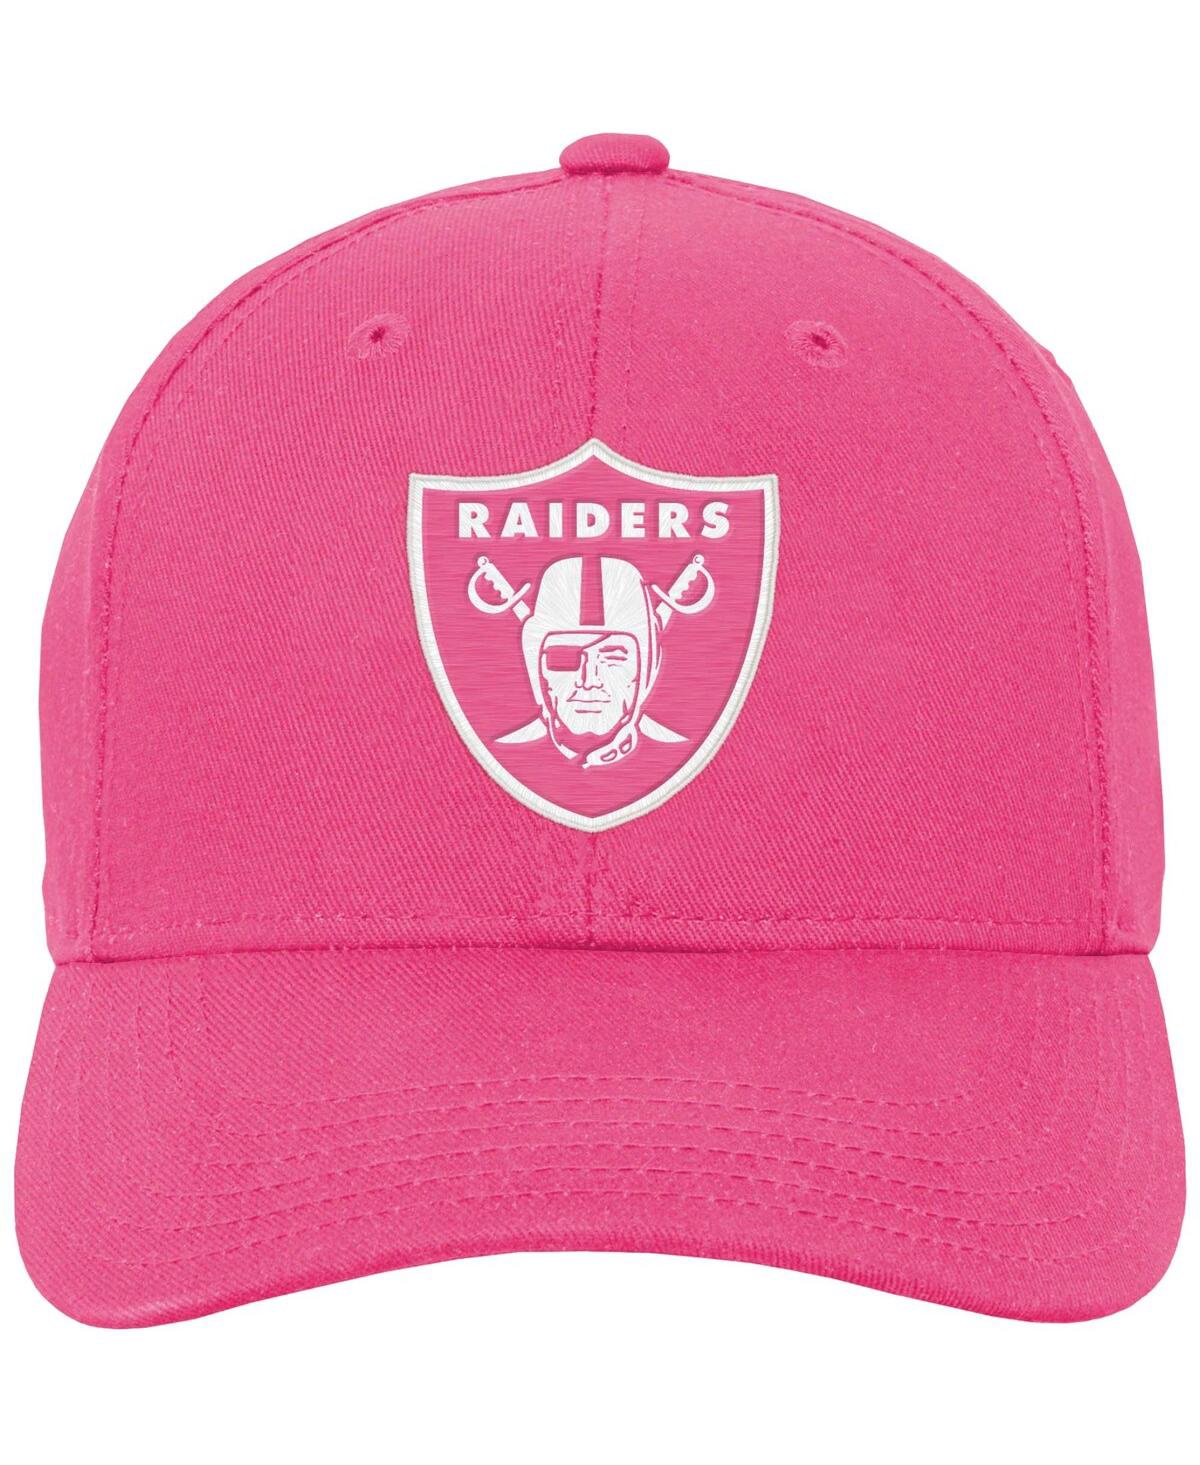 Shop Outerstuff Girls Youth Pink Las Vegas Raiders Adjustable Hat